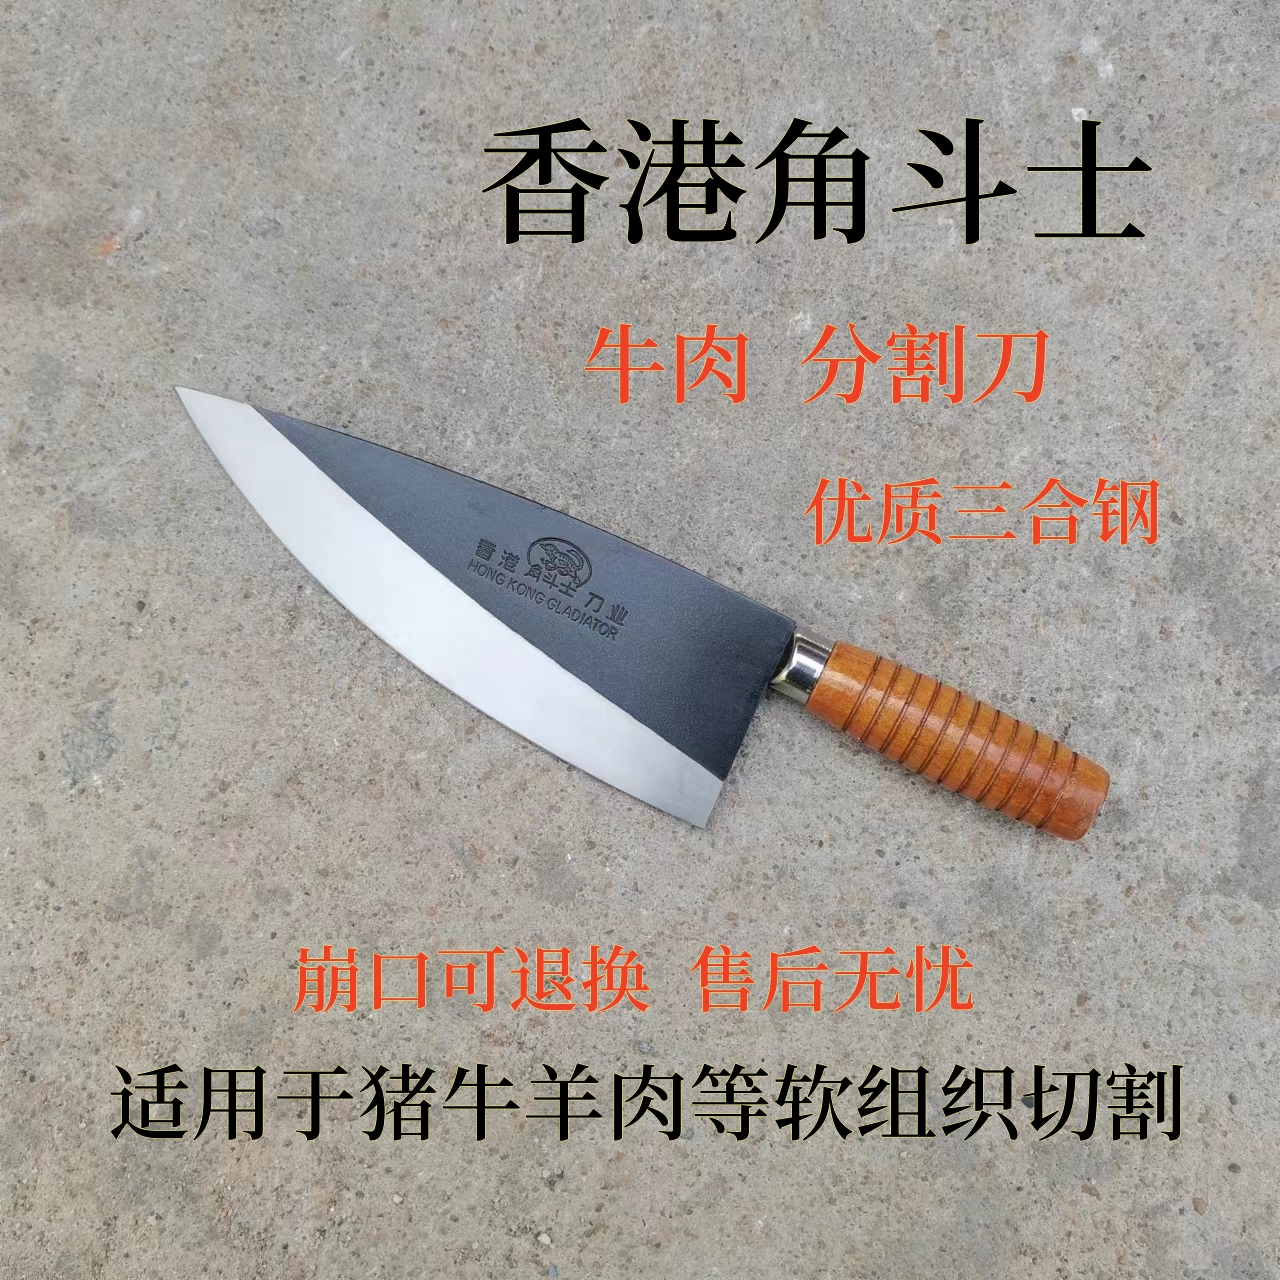 Hong Kong Gladiator Bull Meat Knife Wood Handle Vanguard Steel Cut Cattle Meat Knife Slaughter Hotel Special Pork Knife Pork Split Knife-Taobao